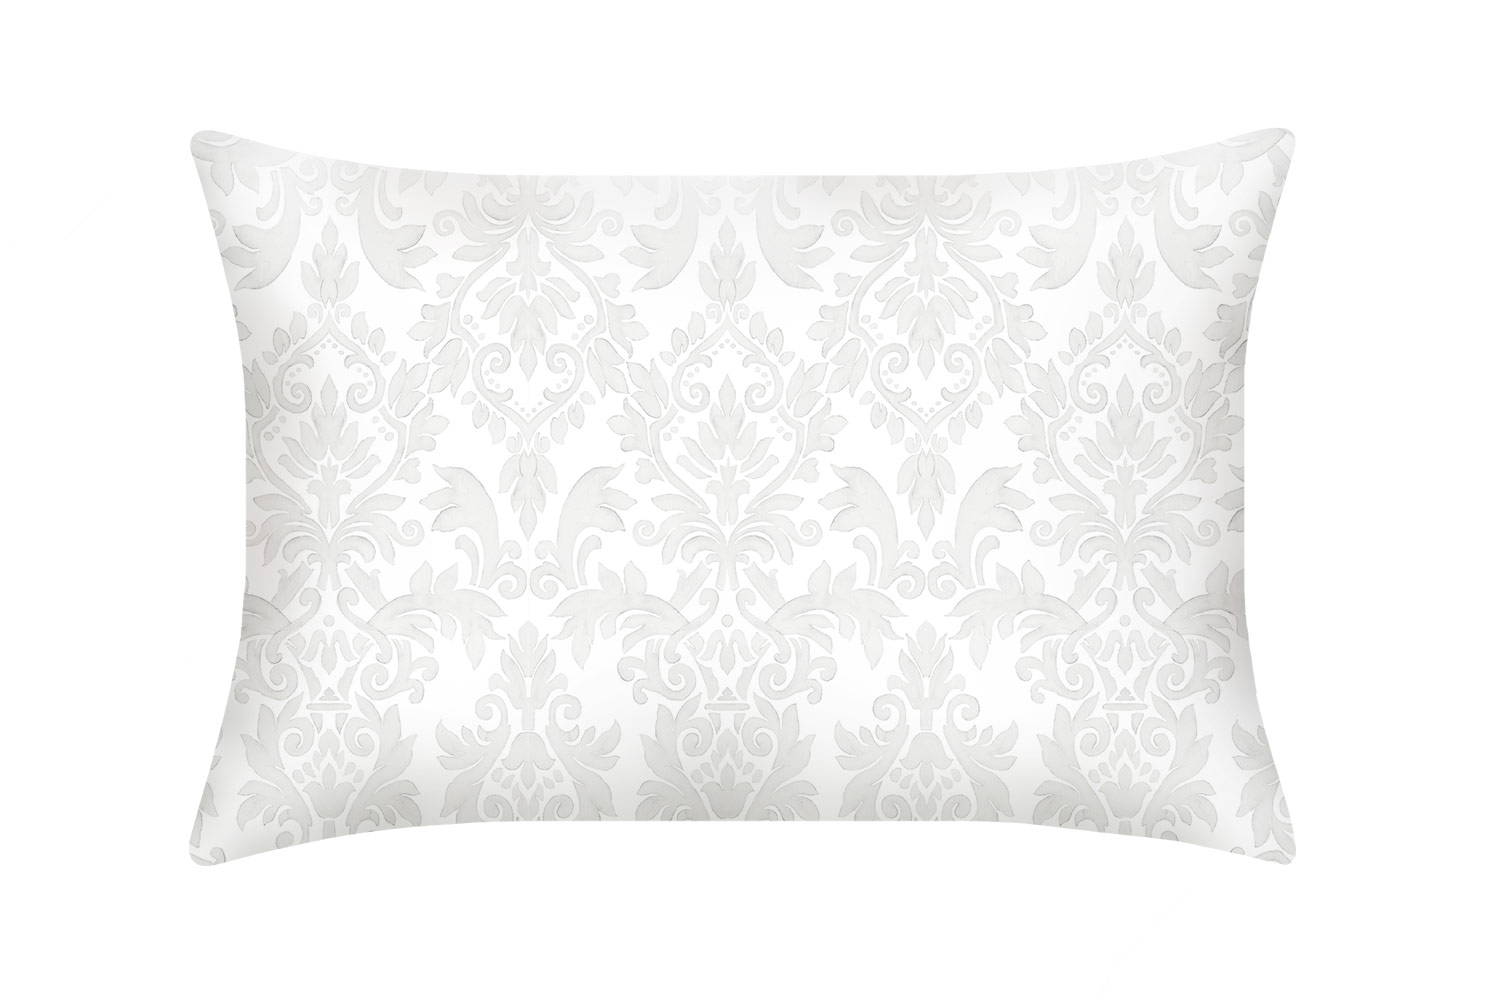 Grey and white damask silk pillowcase by Mayfairsilk